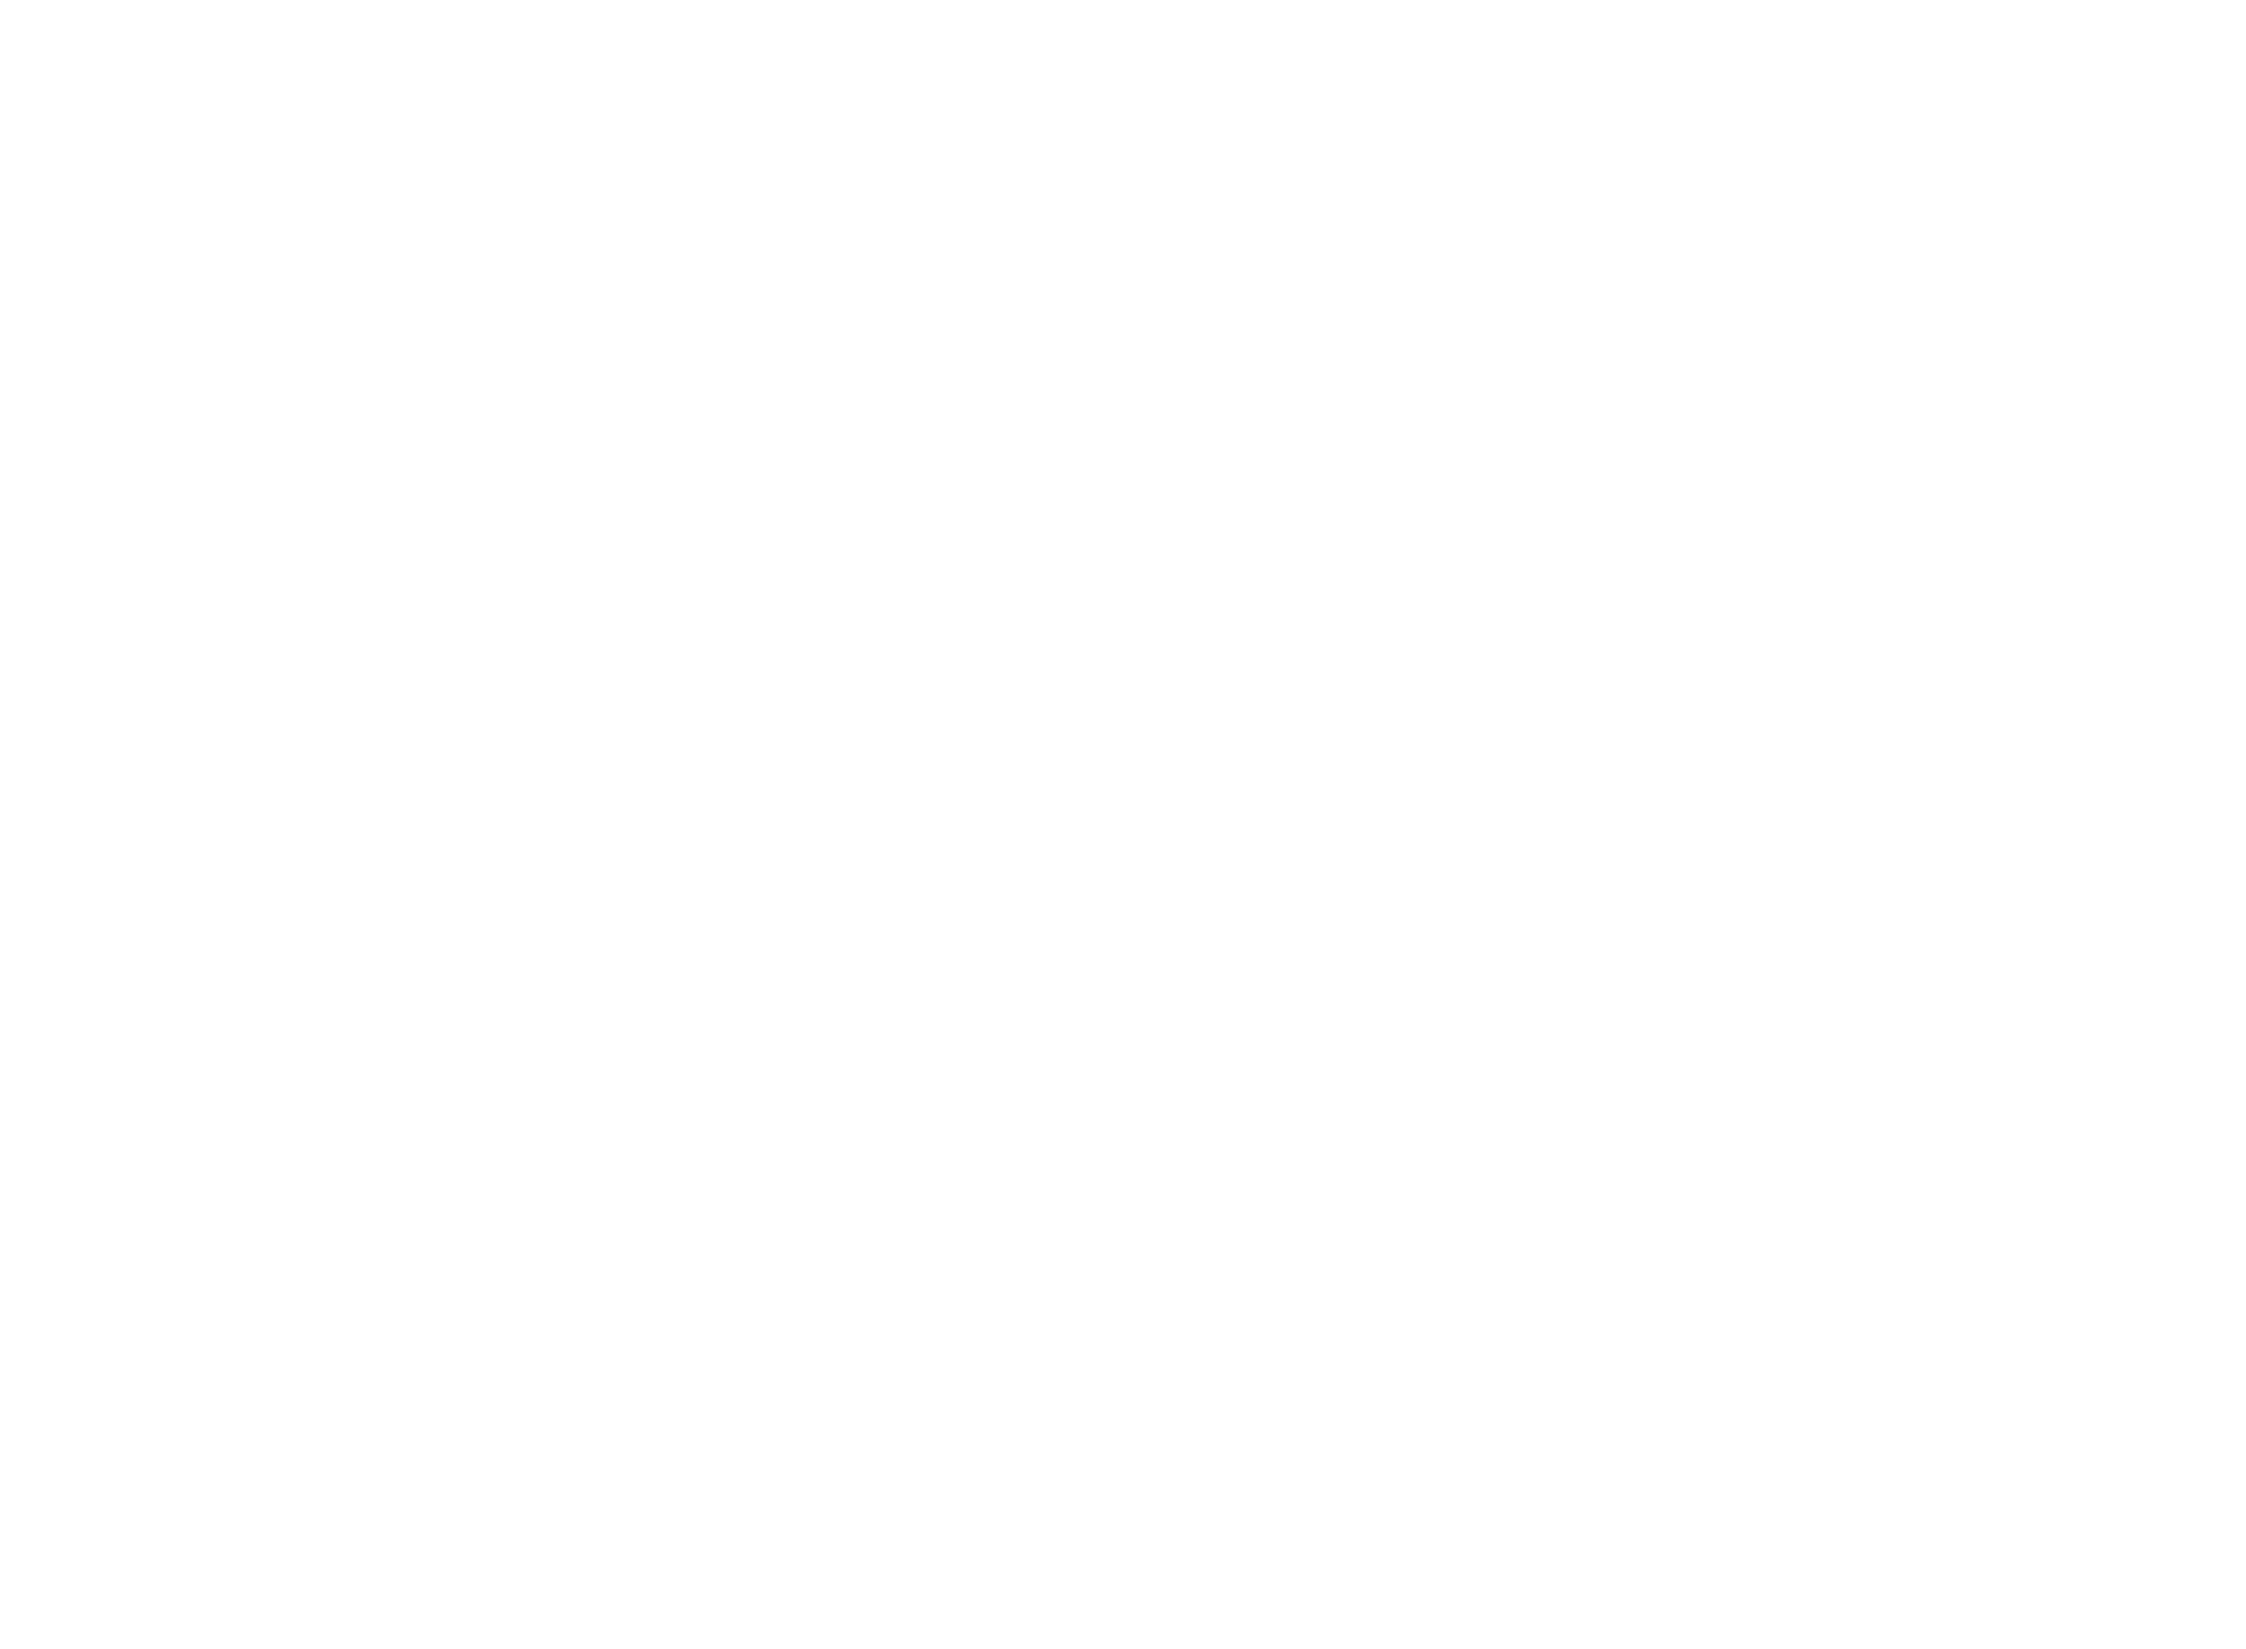 Deep Horse Project